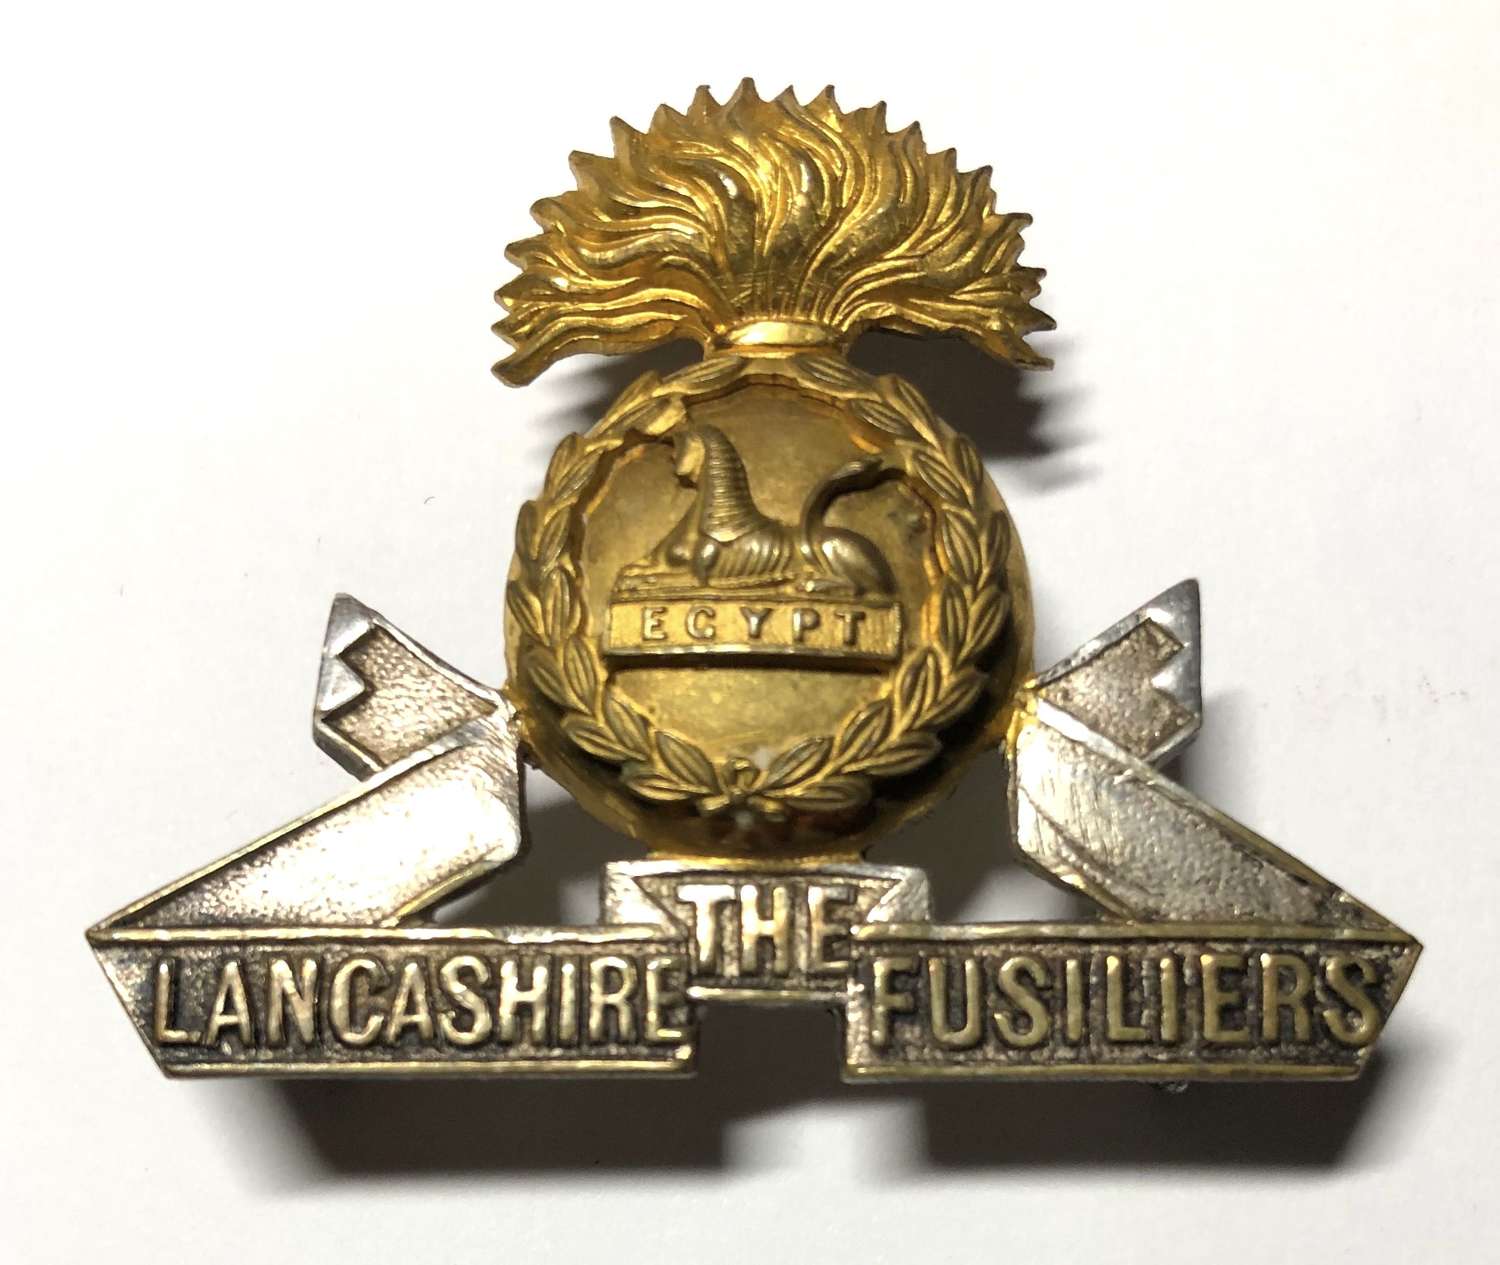 Lancashire Fusiliers Officer's cap badge by J.R. Gaunt, London